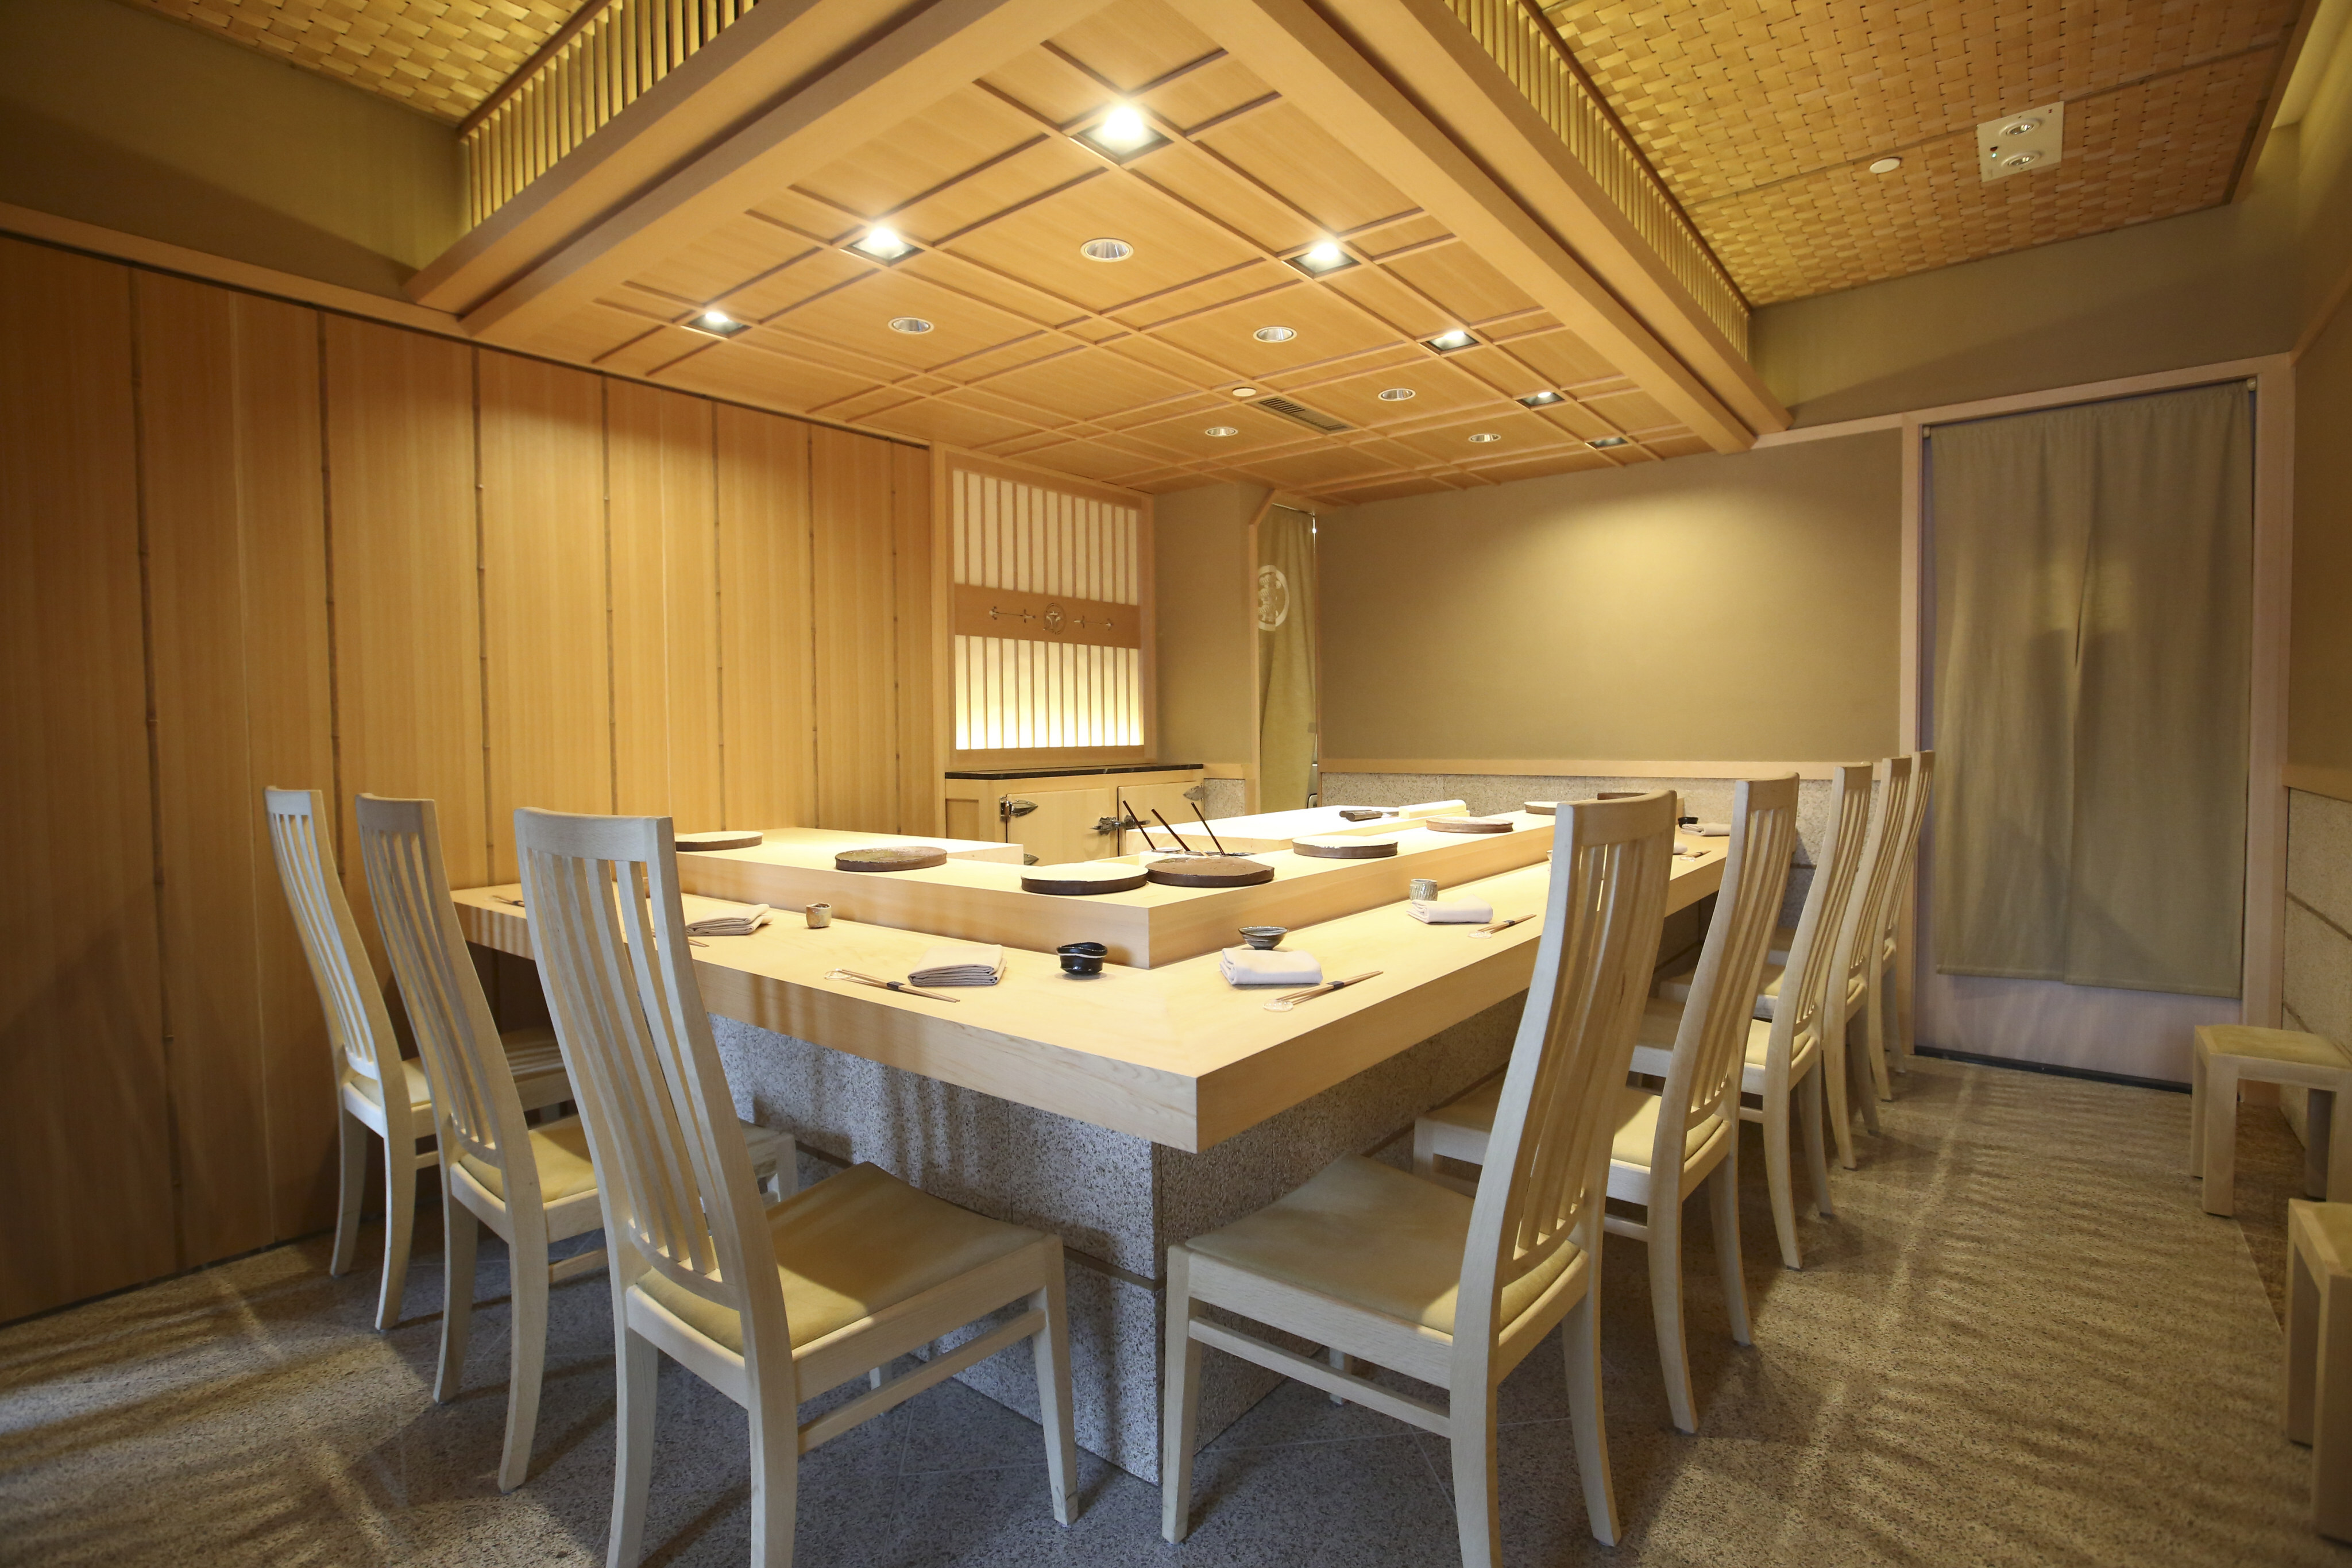 The interior of Sushi Saito, Four Seasons Hotel, Central. Photo: Edmond So